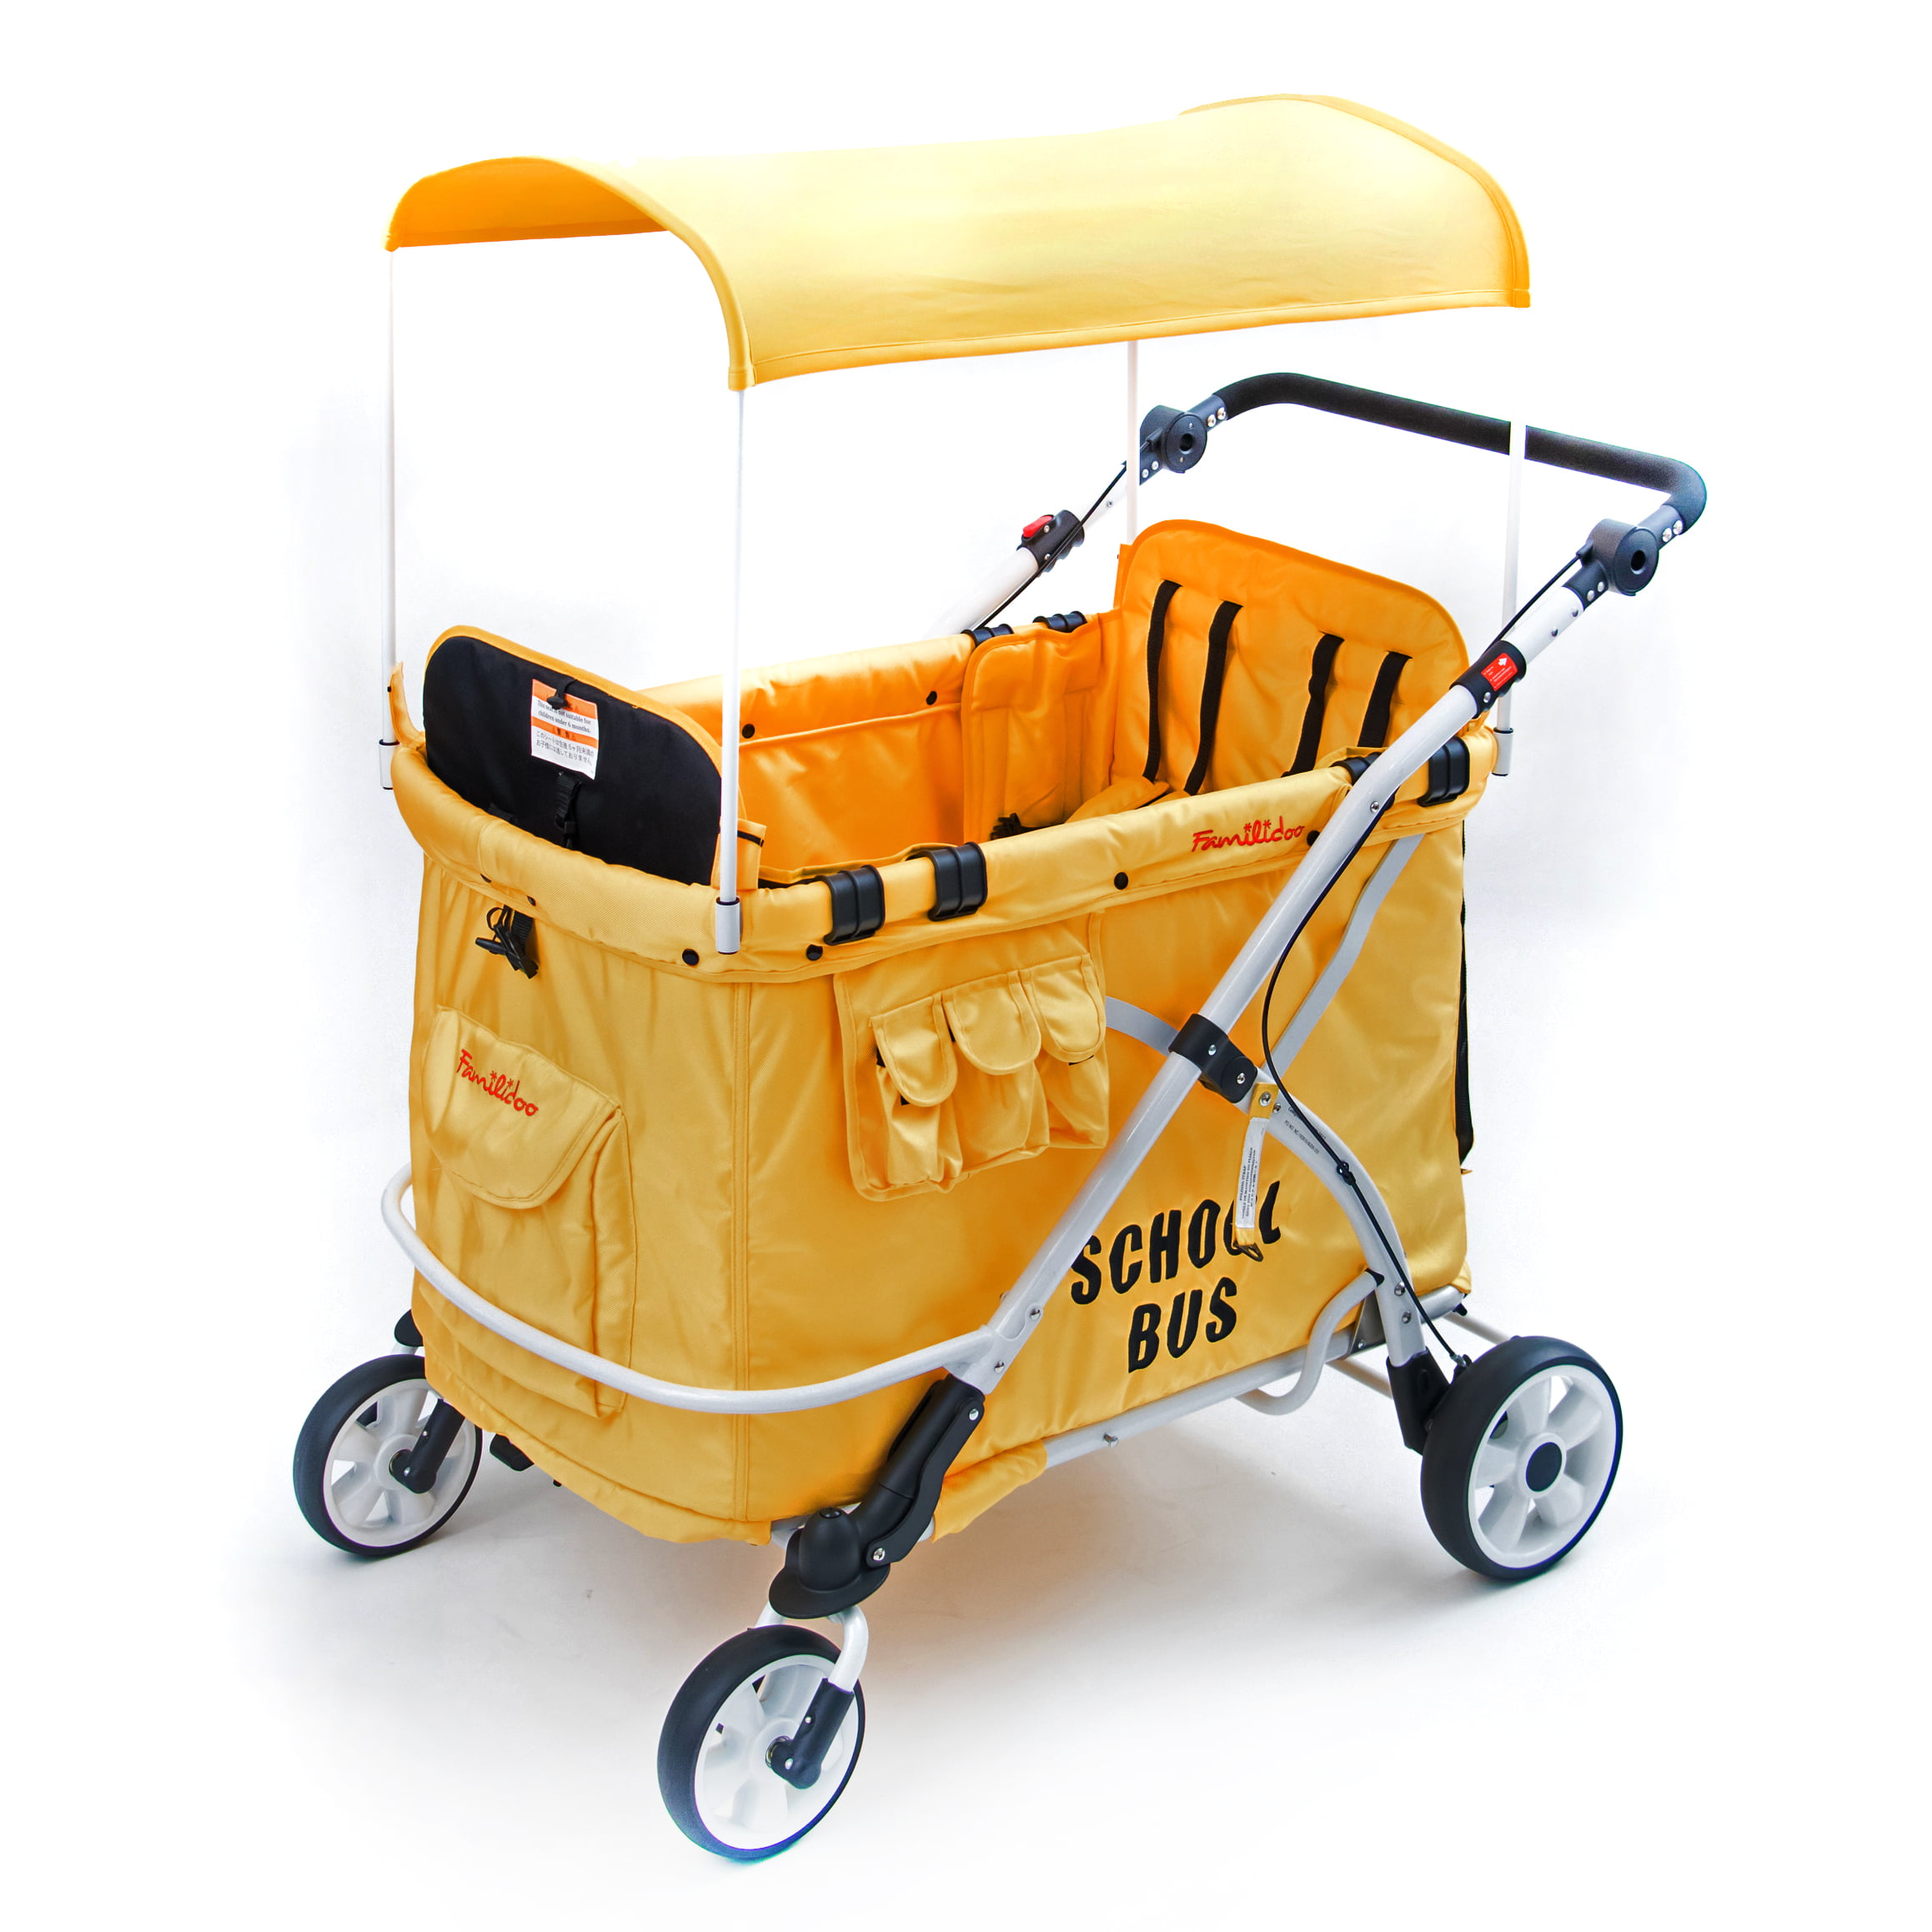 familidoo quad stroller wagon